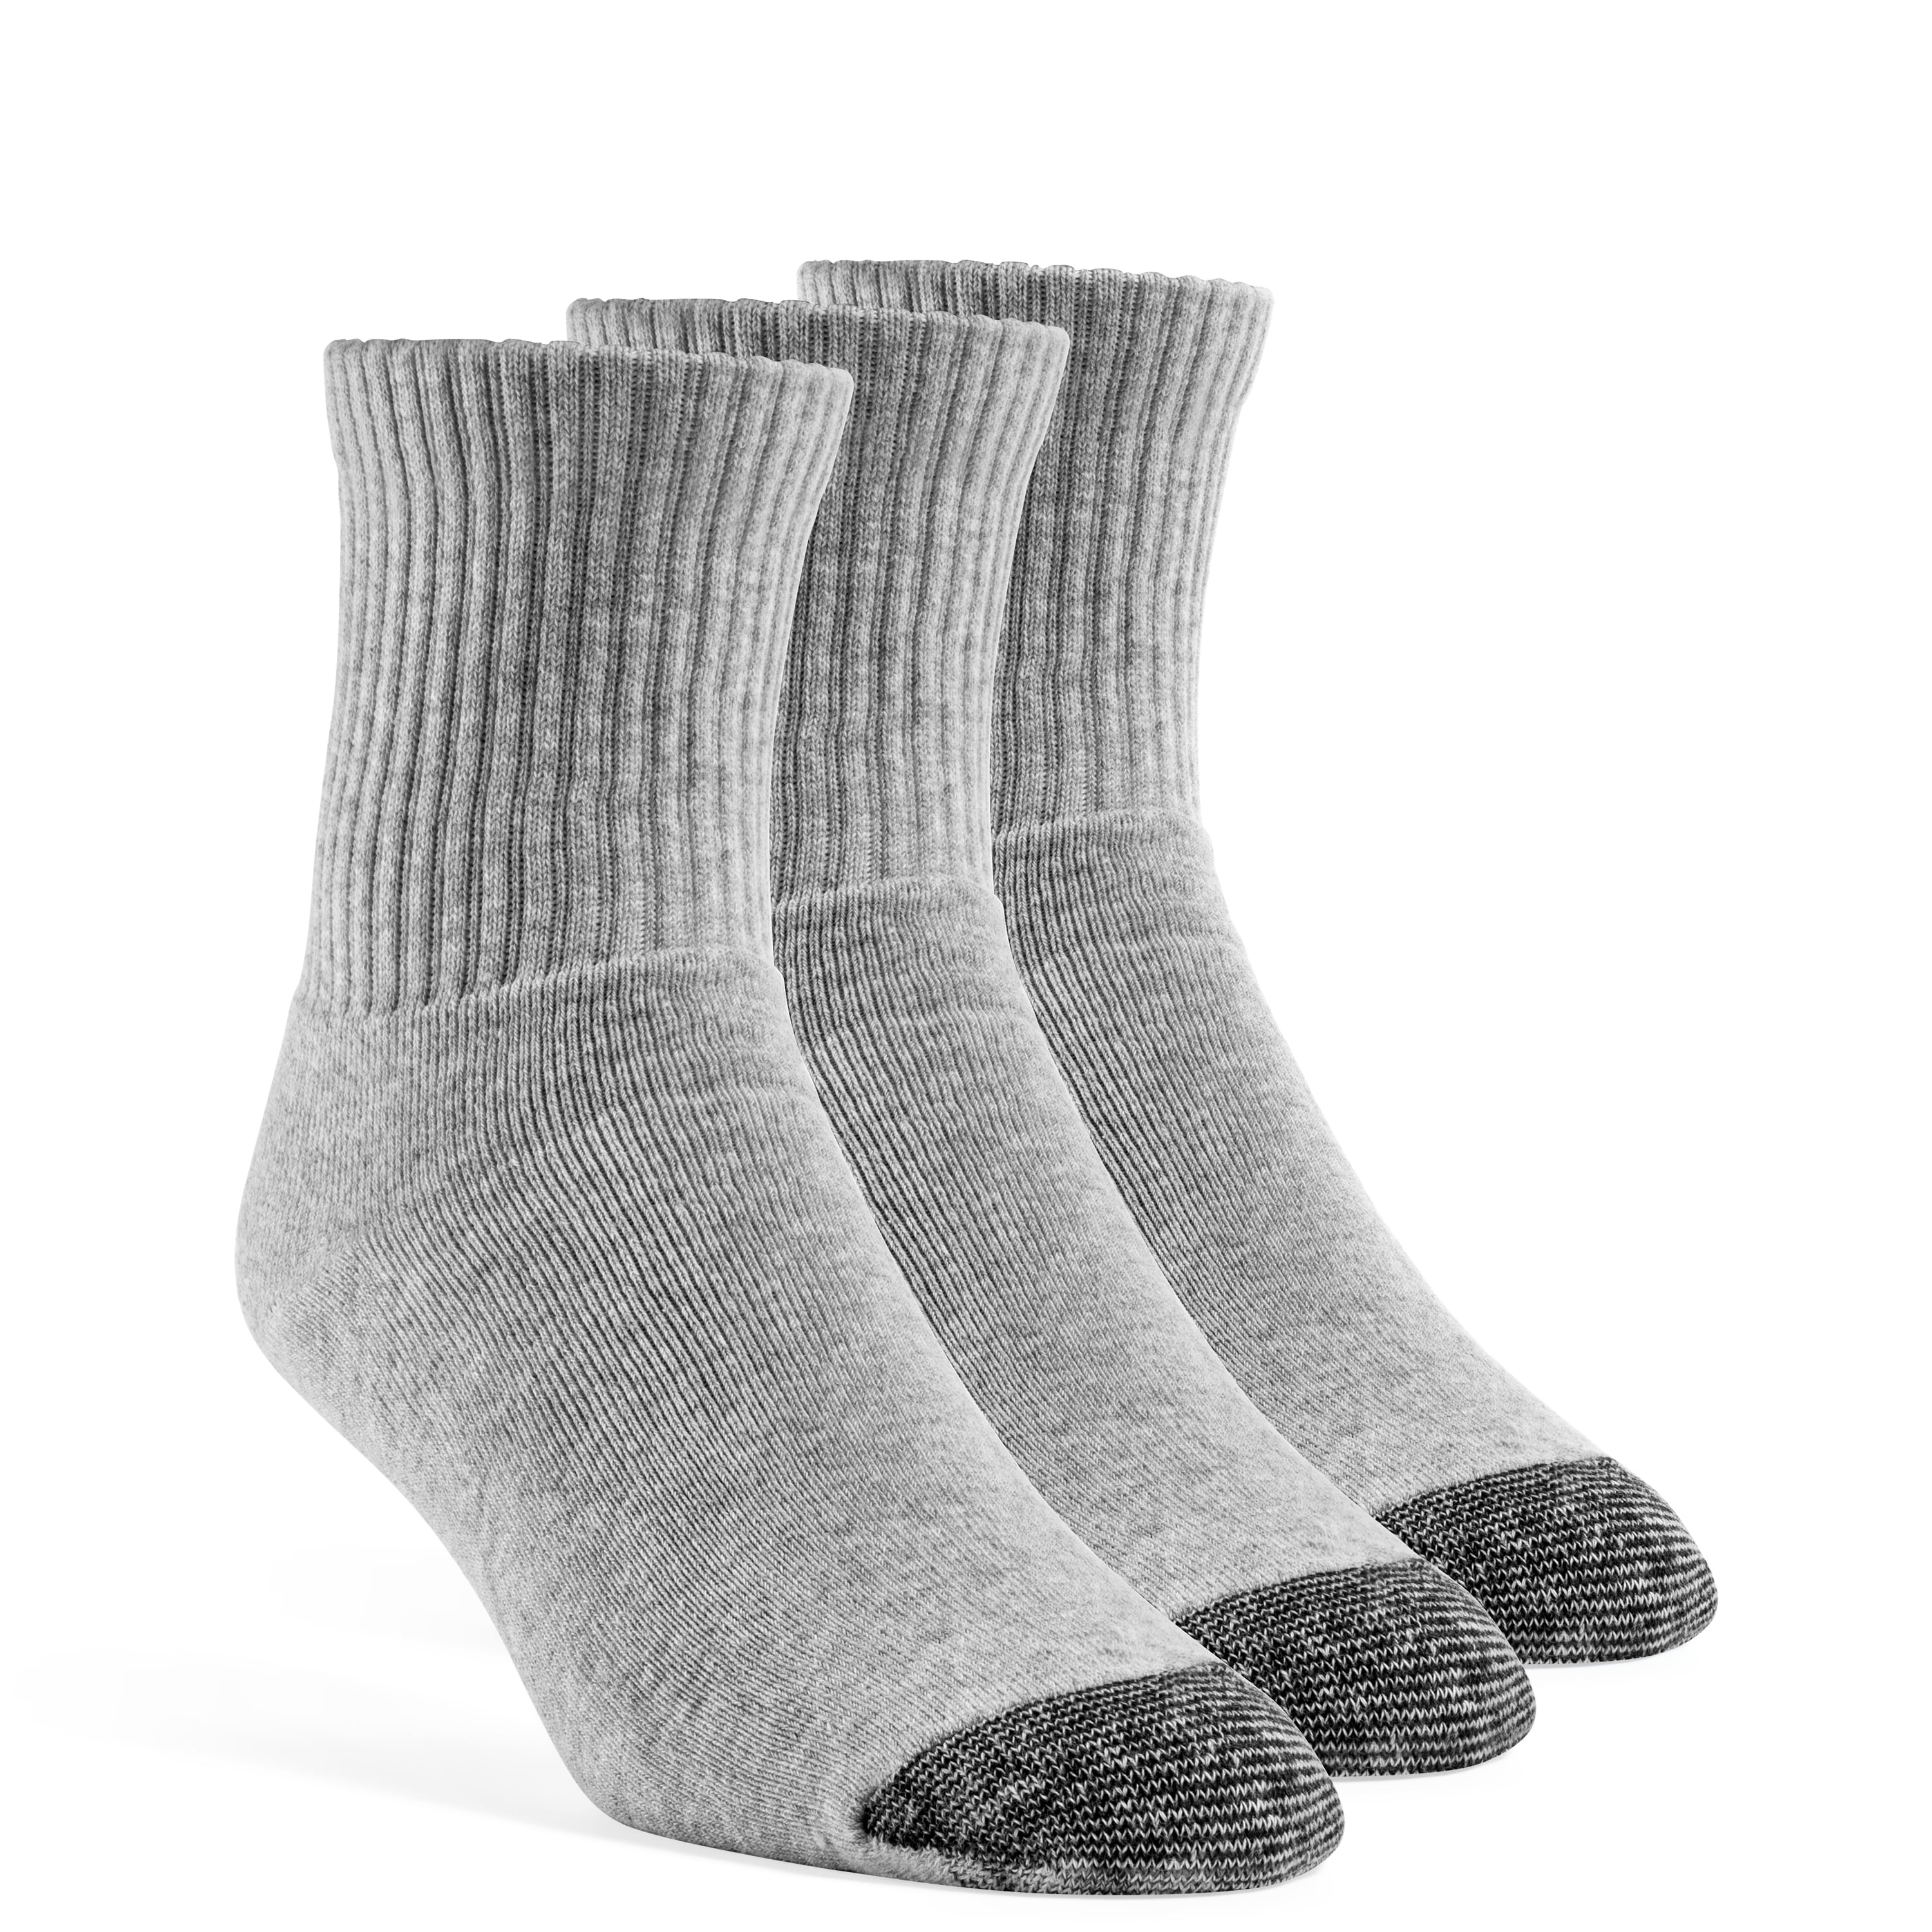 Yolber - Men's Cotton Super Soft Quarter Cushion Socks - 3 Pairs ...